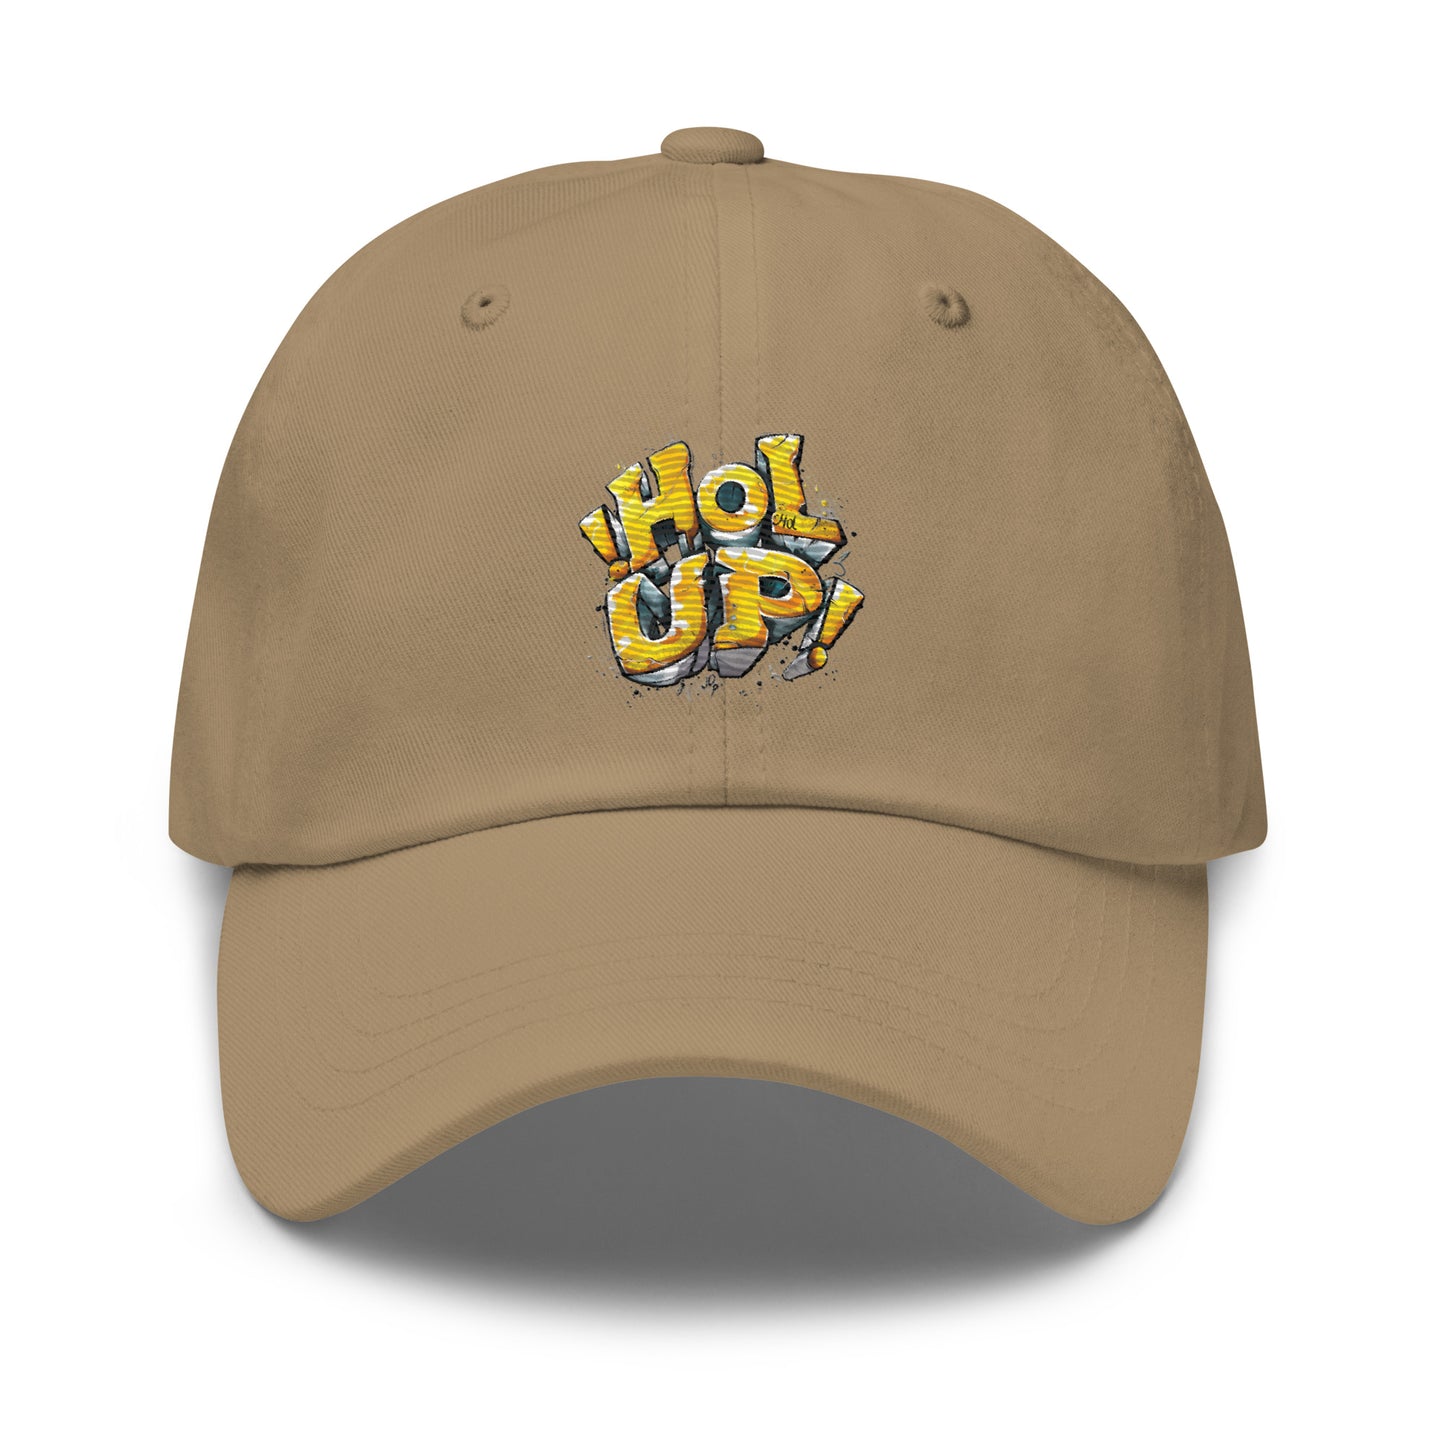 Hol Up! - Dad hat